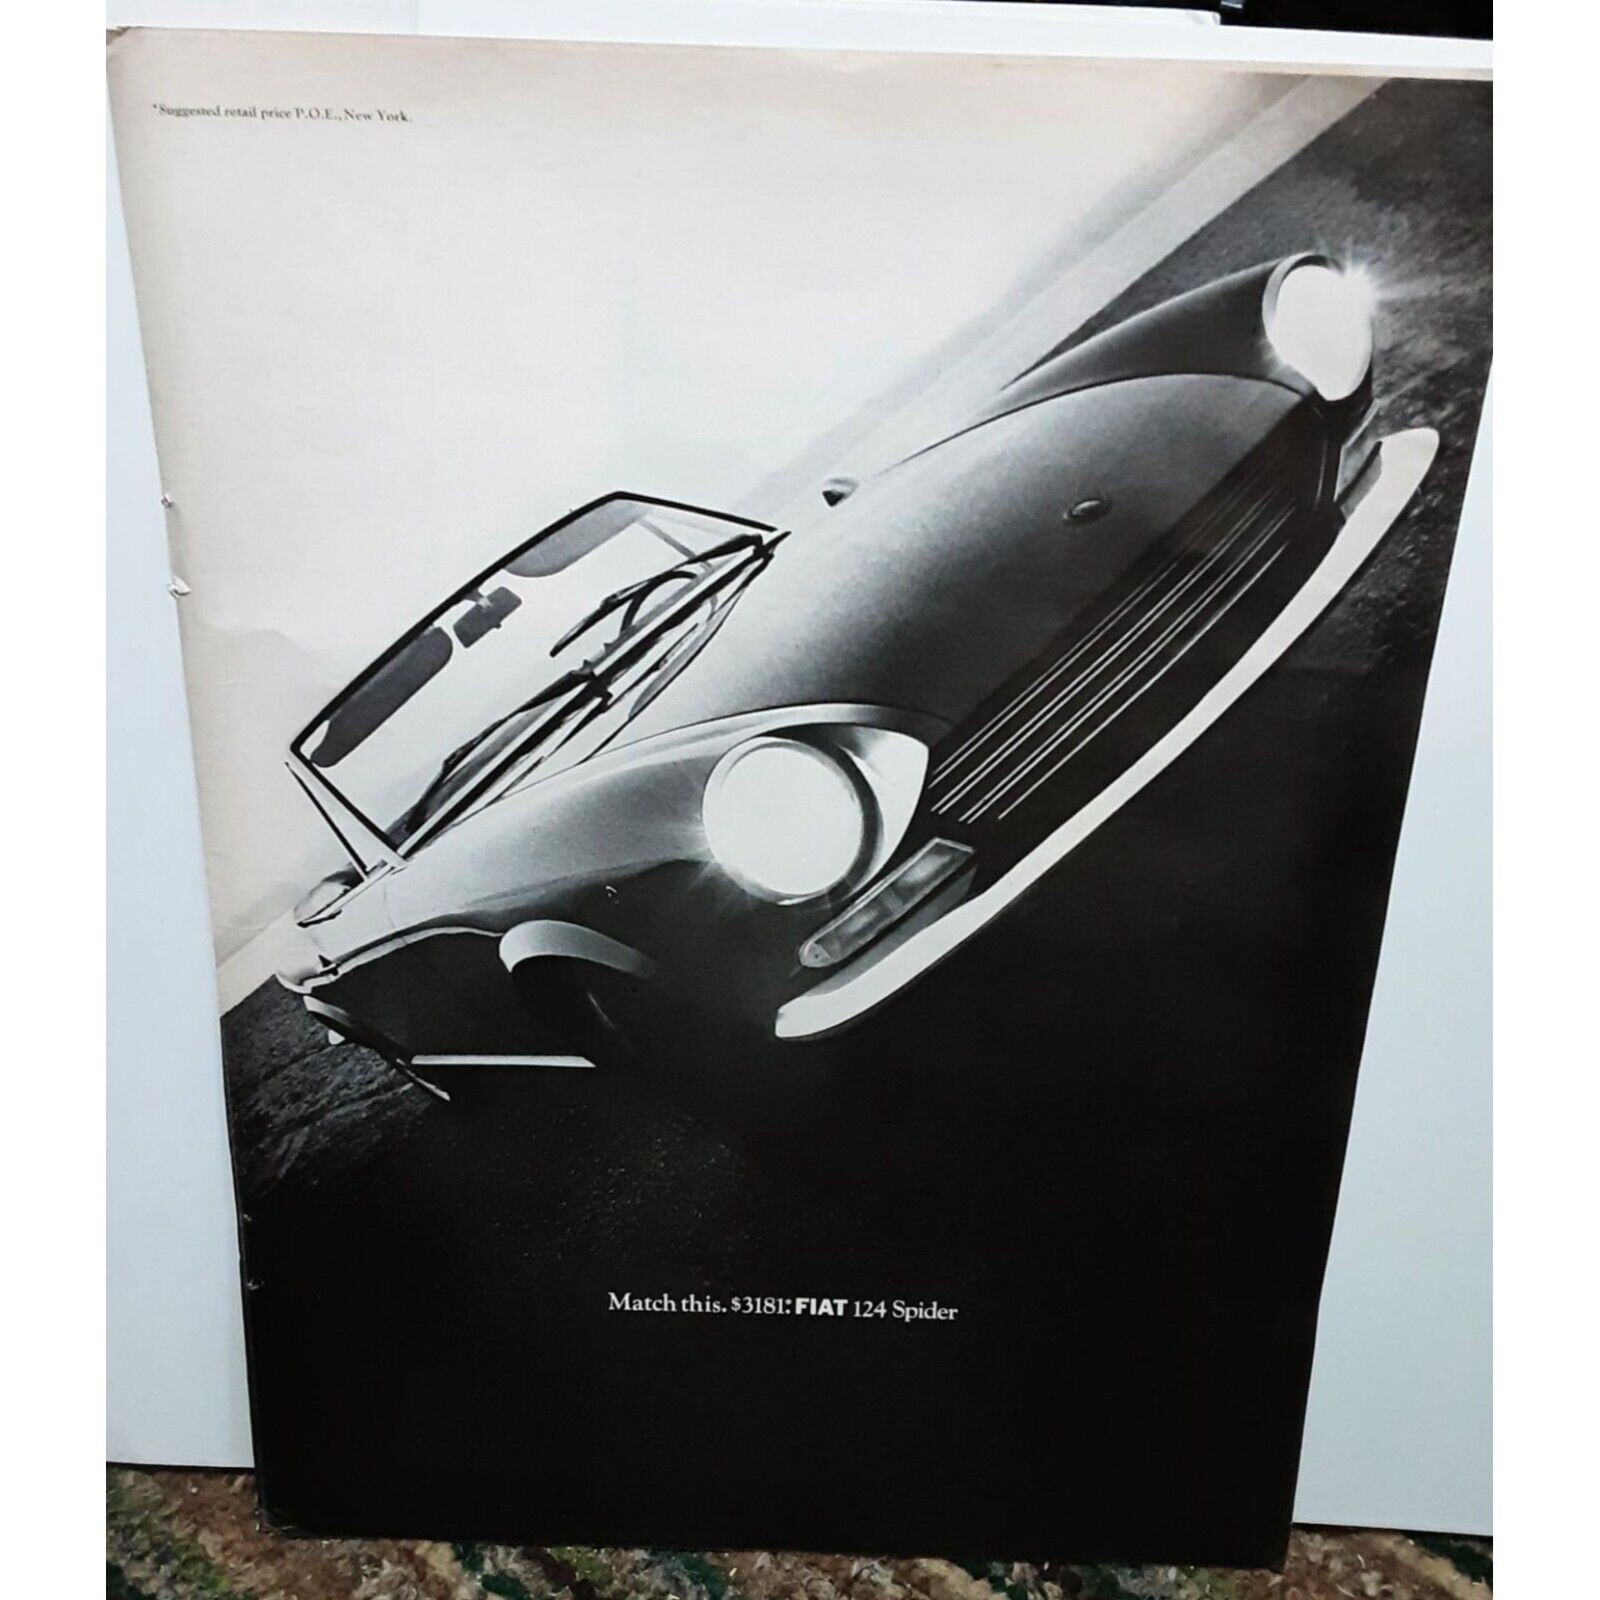 1968 Fiat Spider 124 car Vintage Print Ad Original